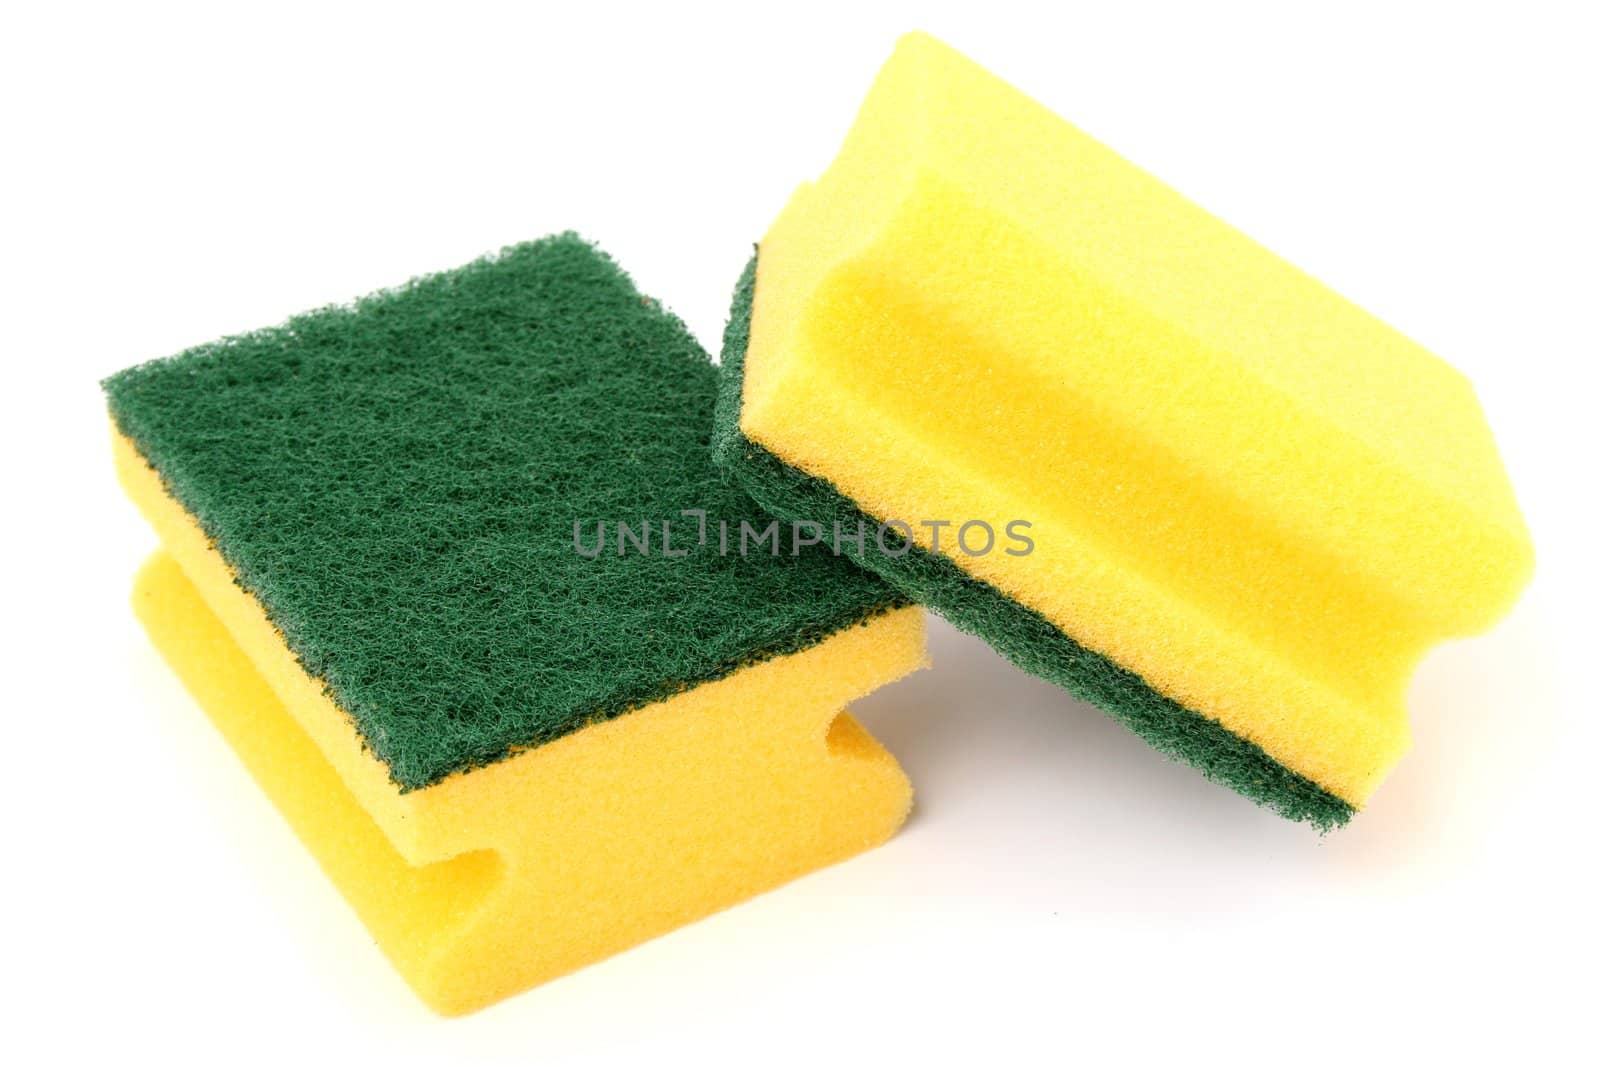 Sponge for washing utensils, on a white background 